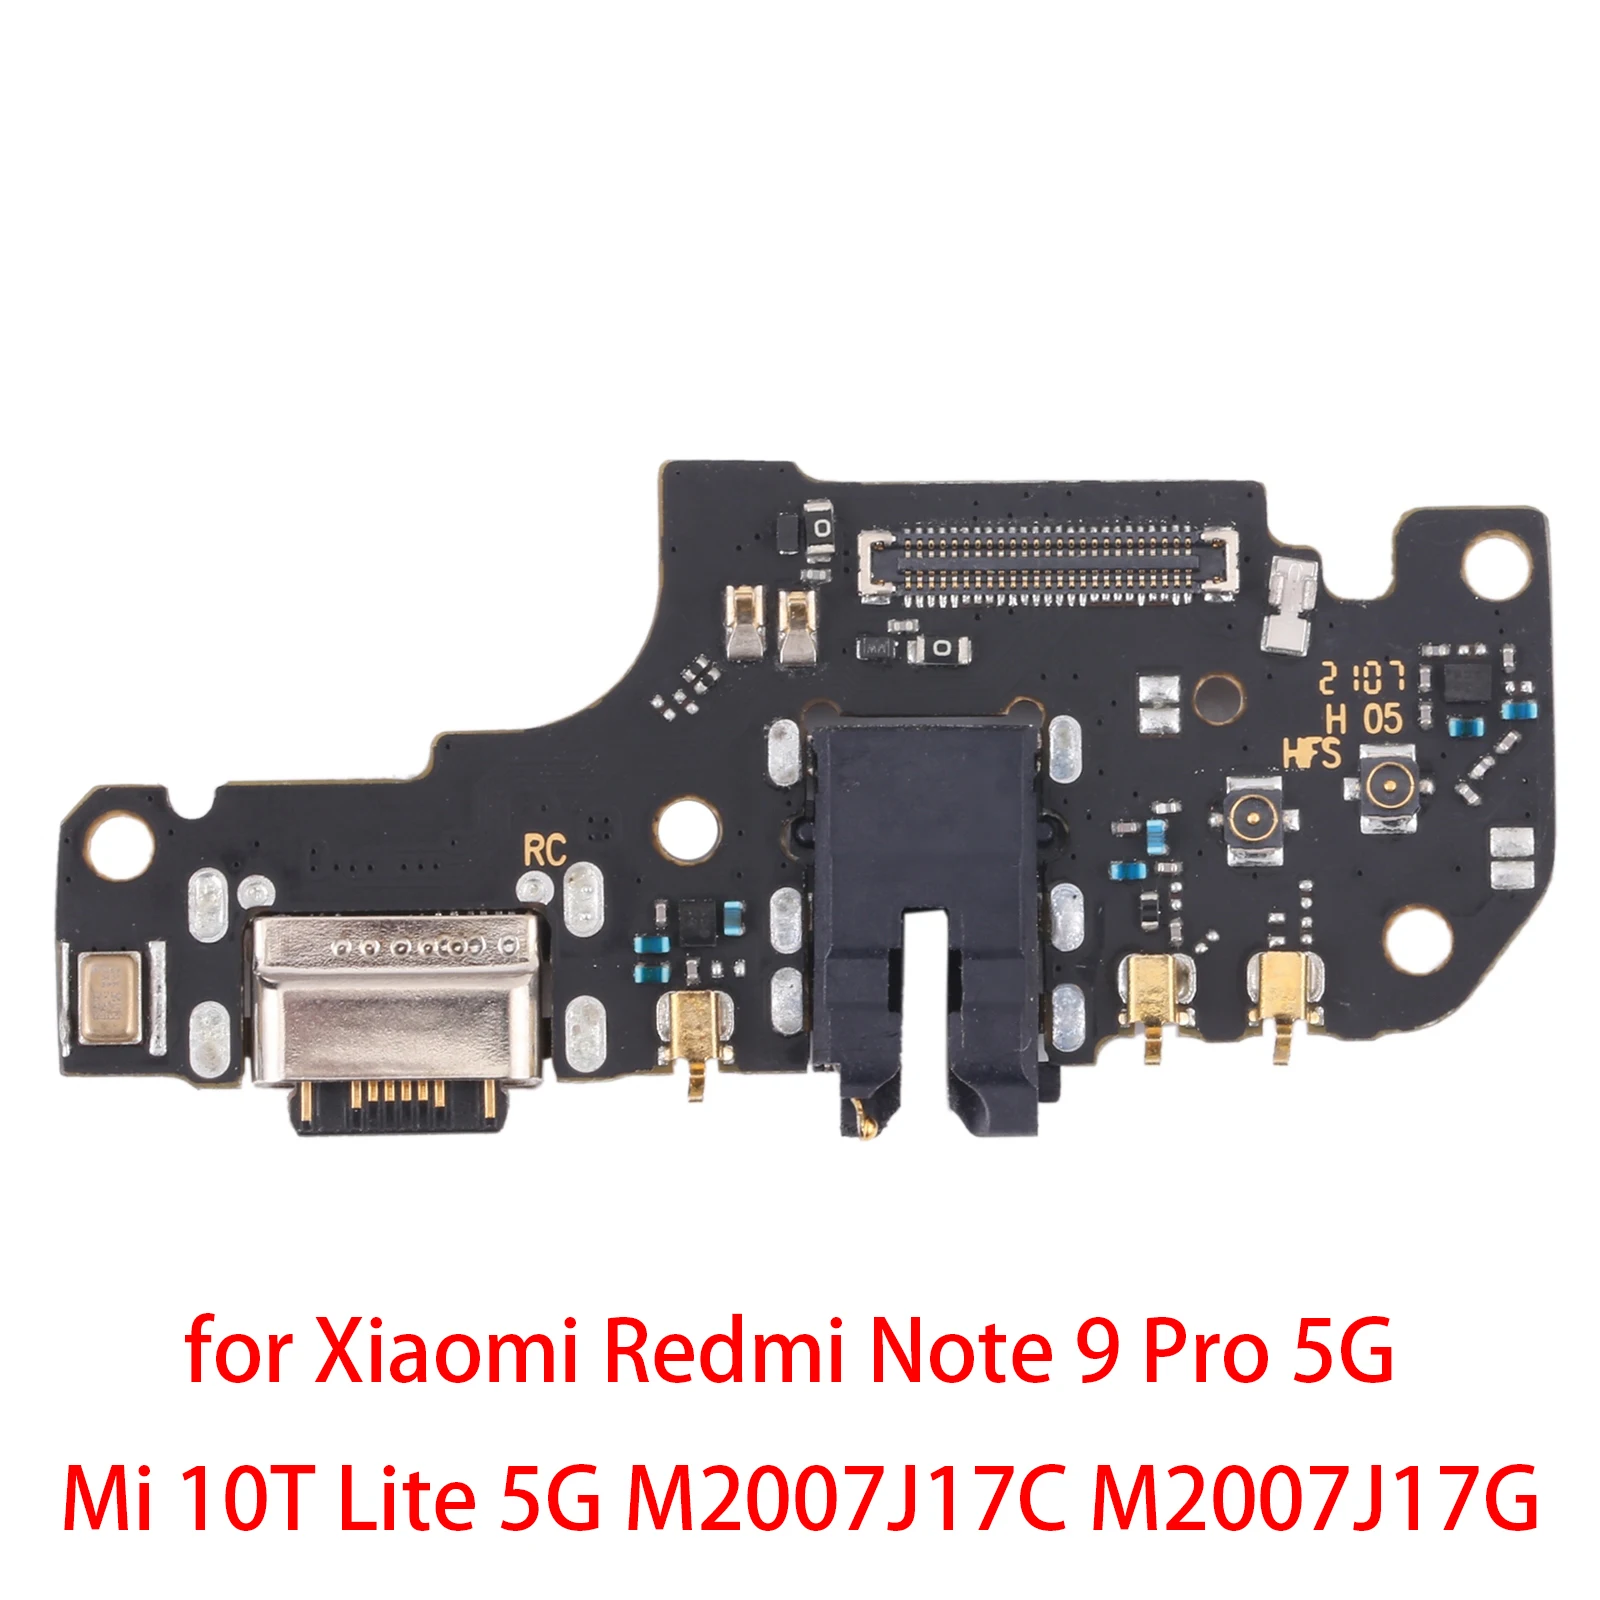 

Original USB Charging Port Board for Xiaomi Redmi Note 9 Pro 5G / Mi 10T Lite 5G M2007J17C M2007J17G